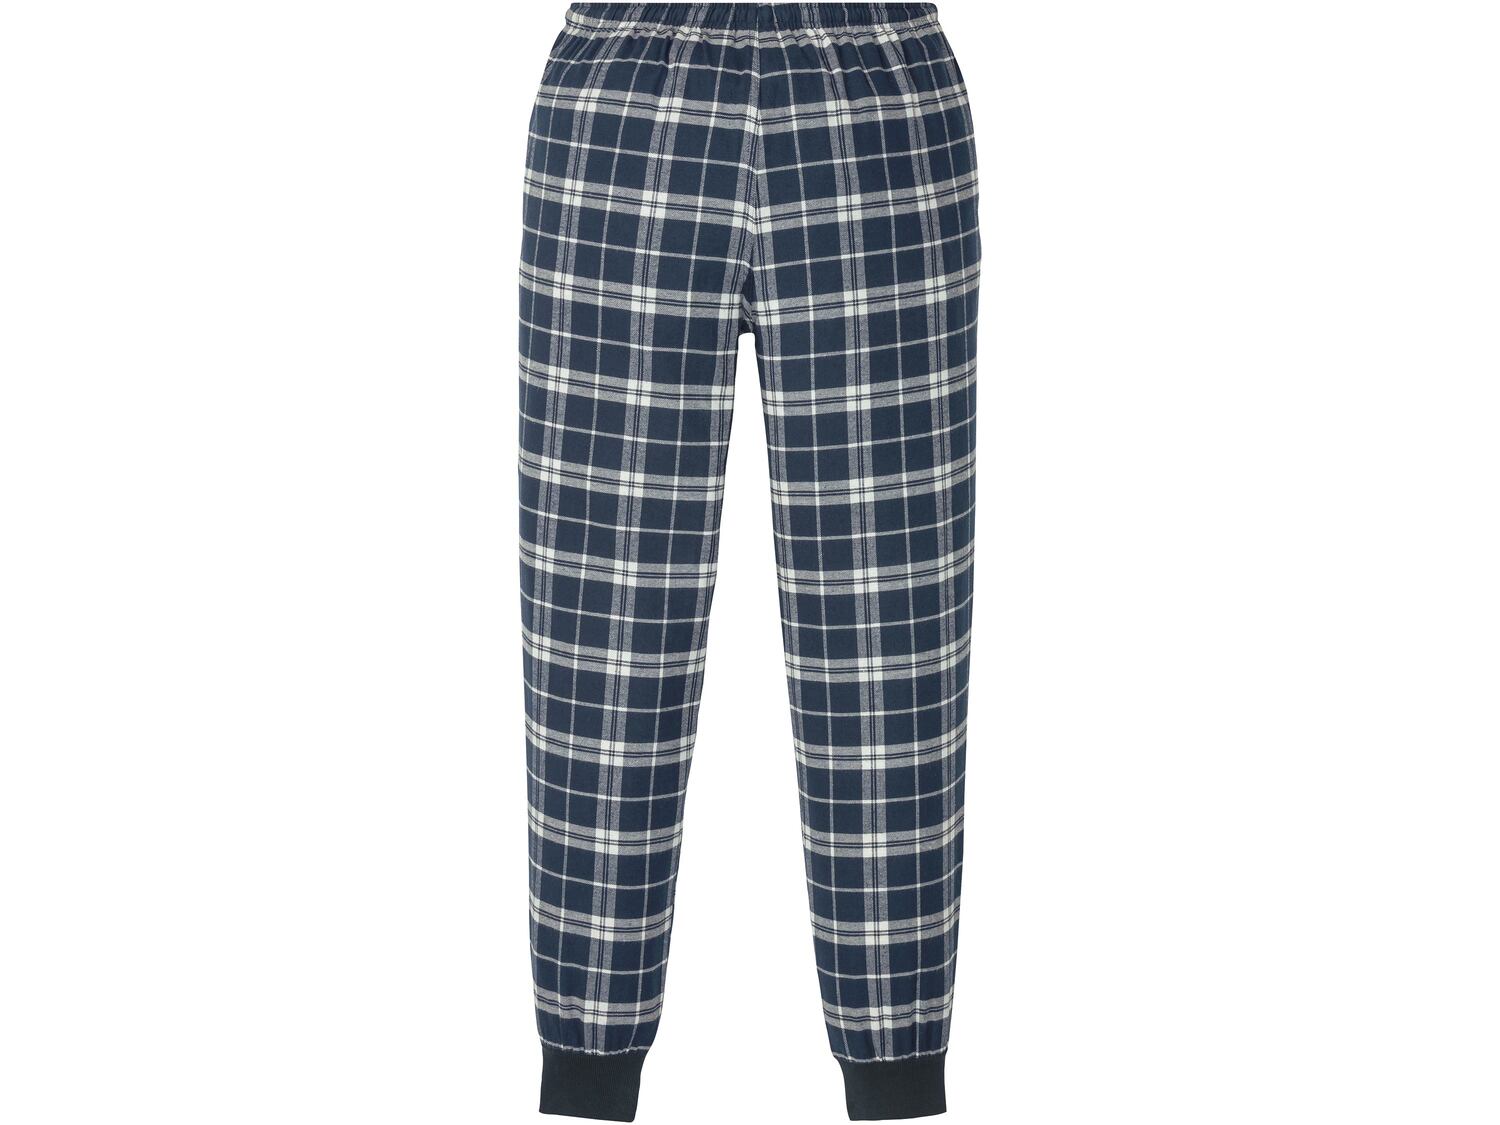 Spodnie do spania męskie Livergy, cena 24,99 PLN 
- rozmiary: S-XL
- 100% bawełny
Dostępne ...